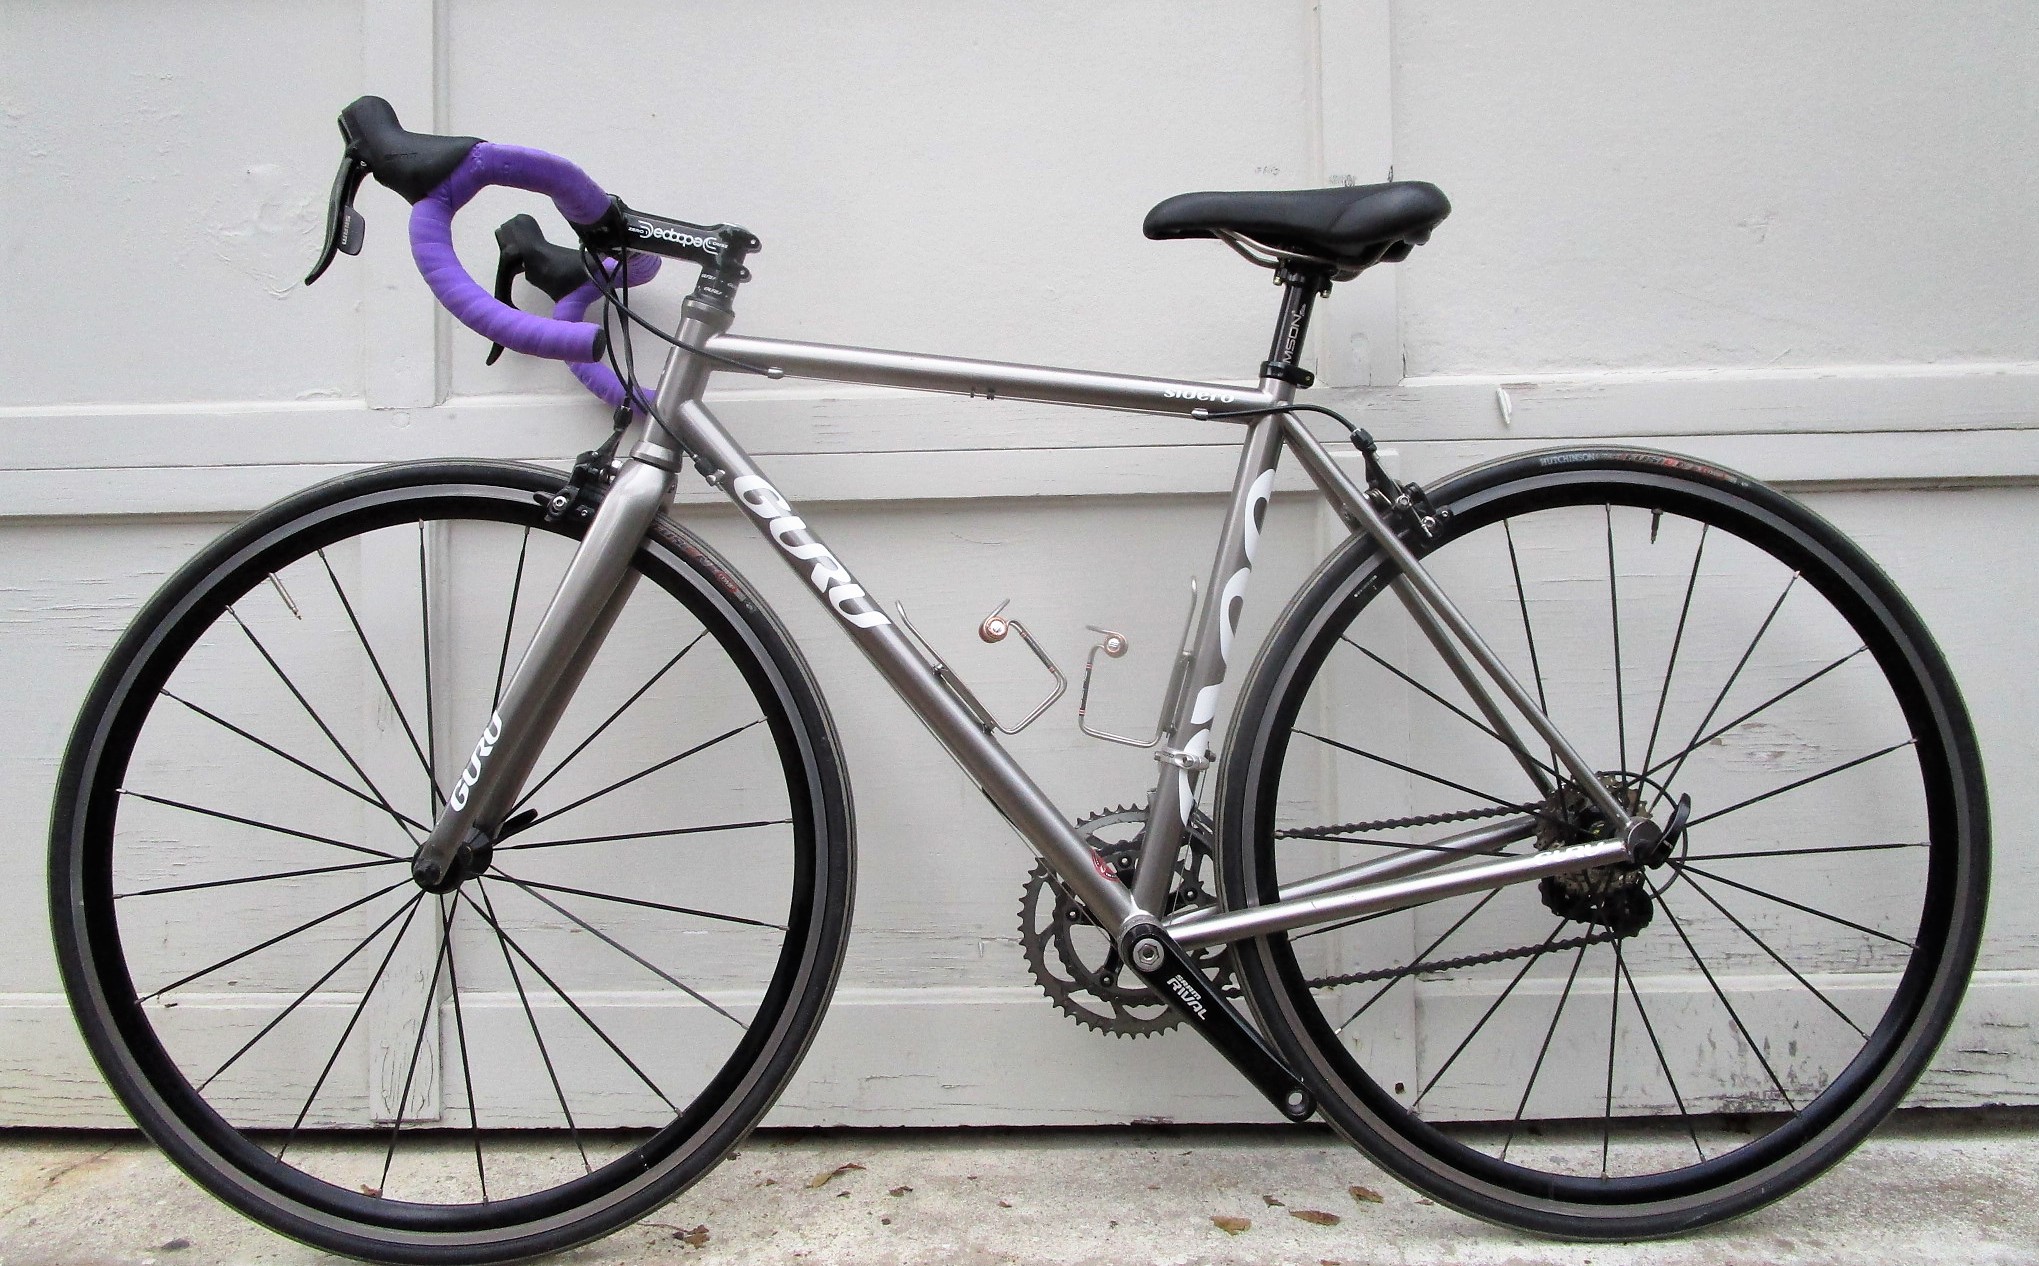 50cm bike frame